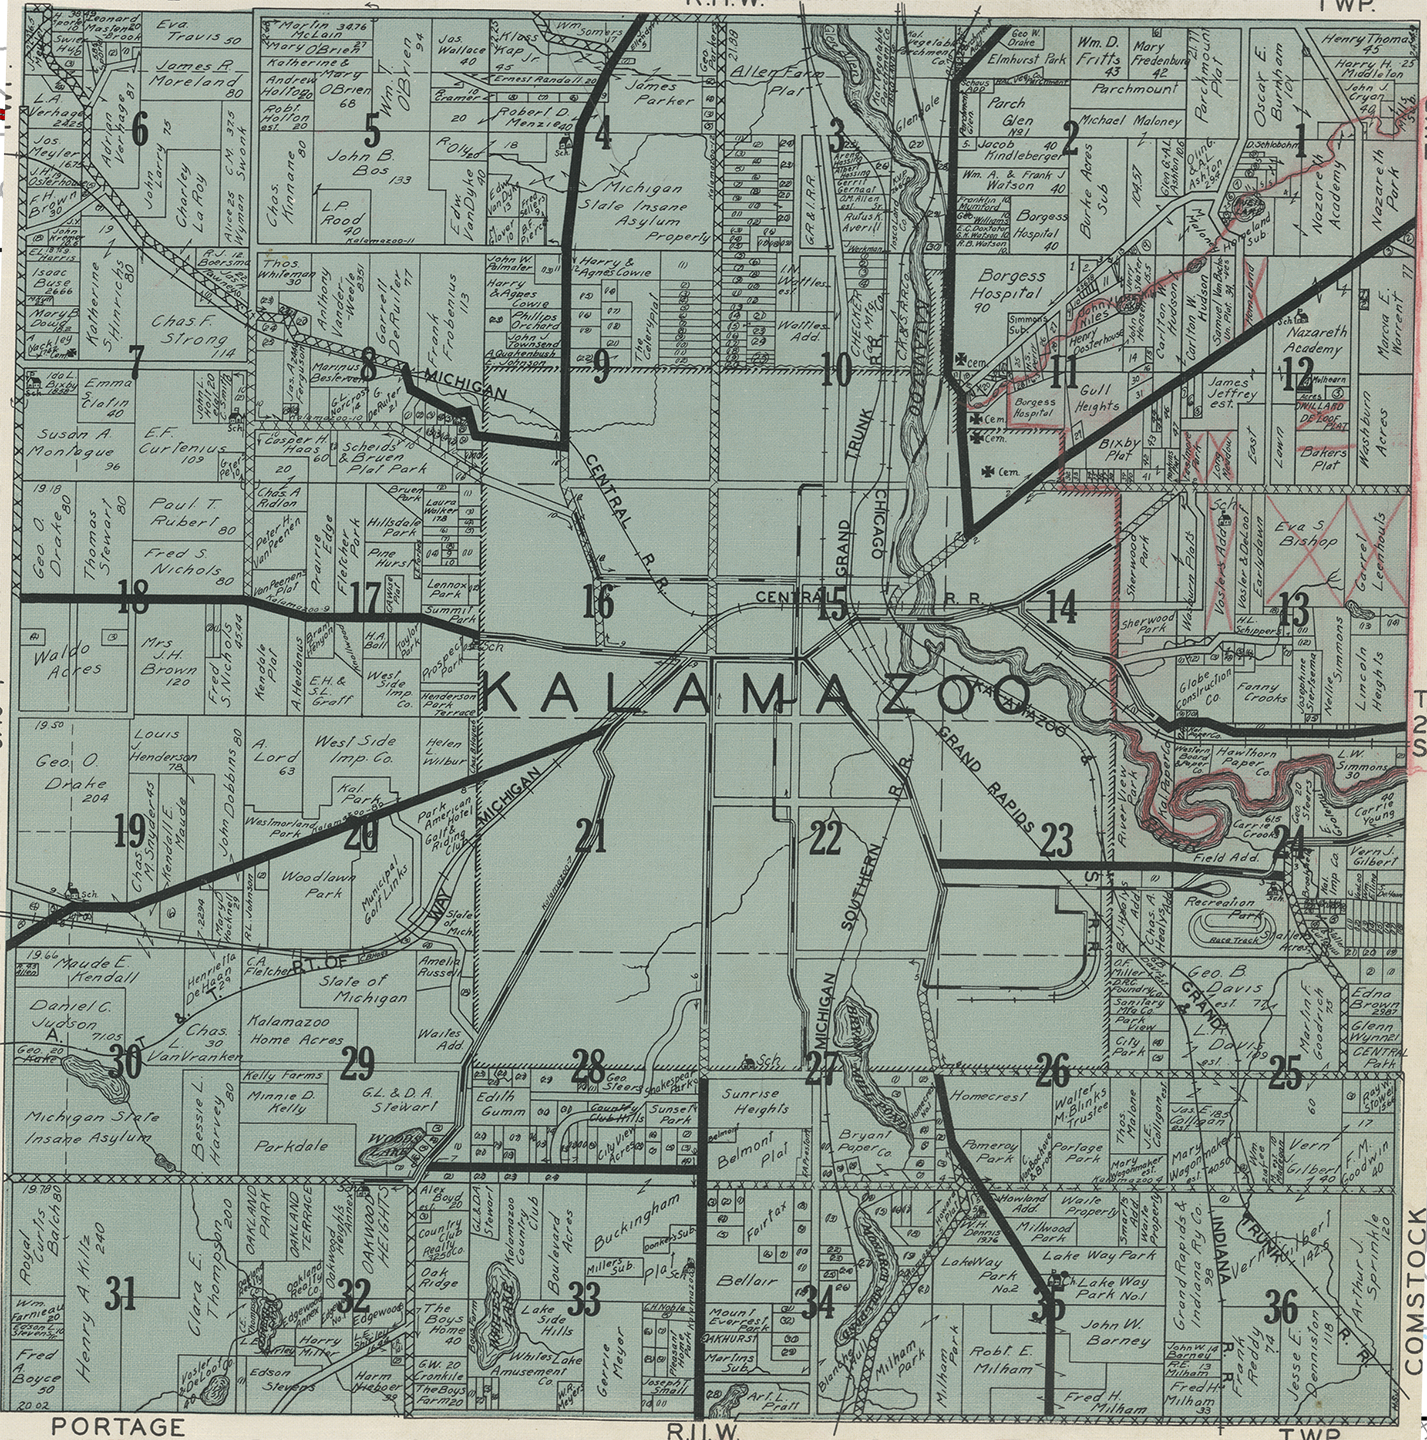 1928 Kalamazoo Township Michigan landownership map